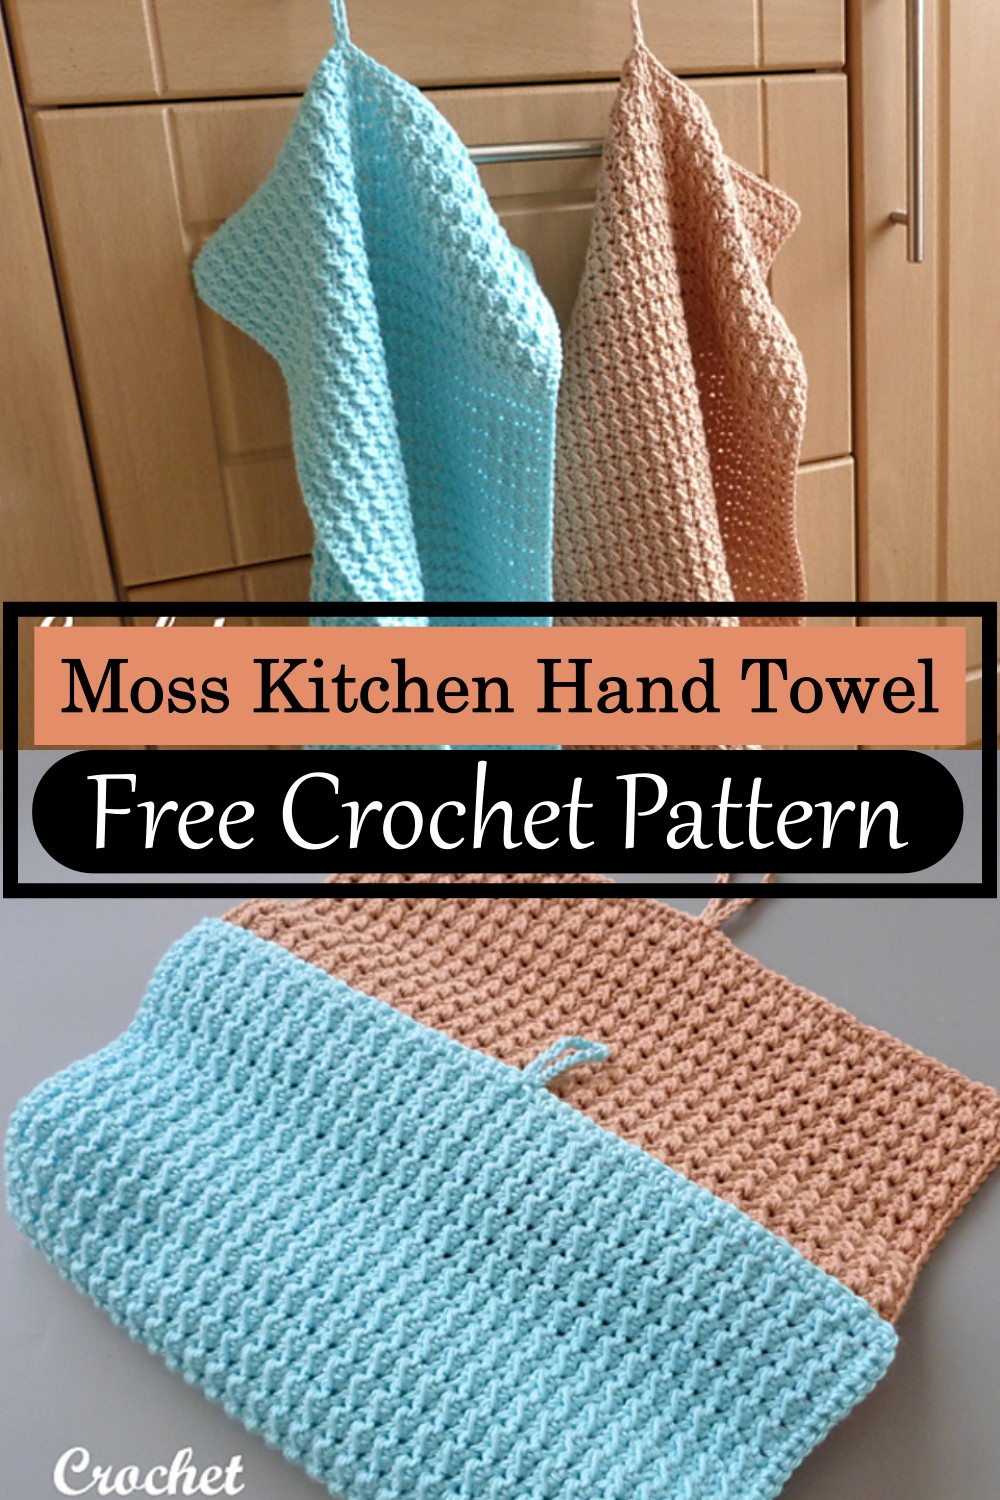 Moss Kitchen Hand Towel